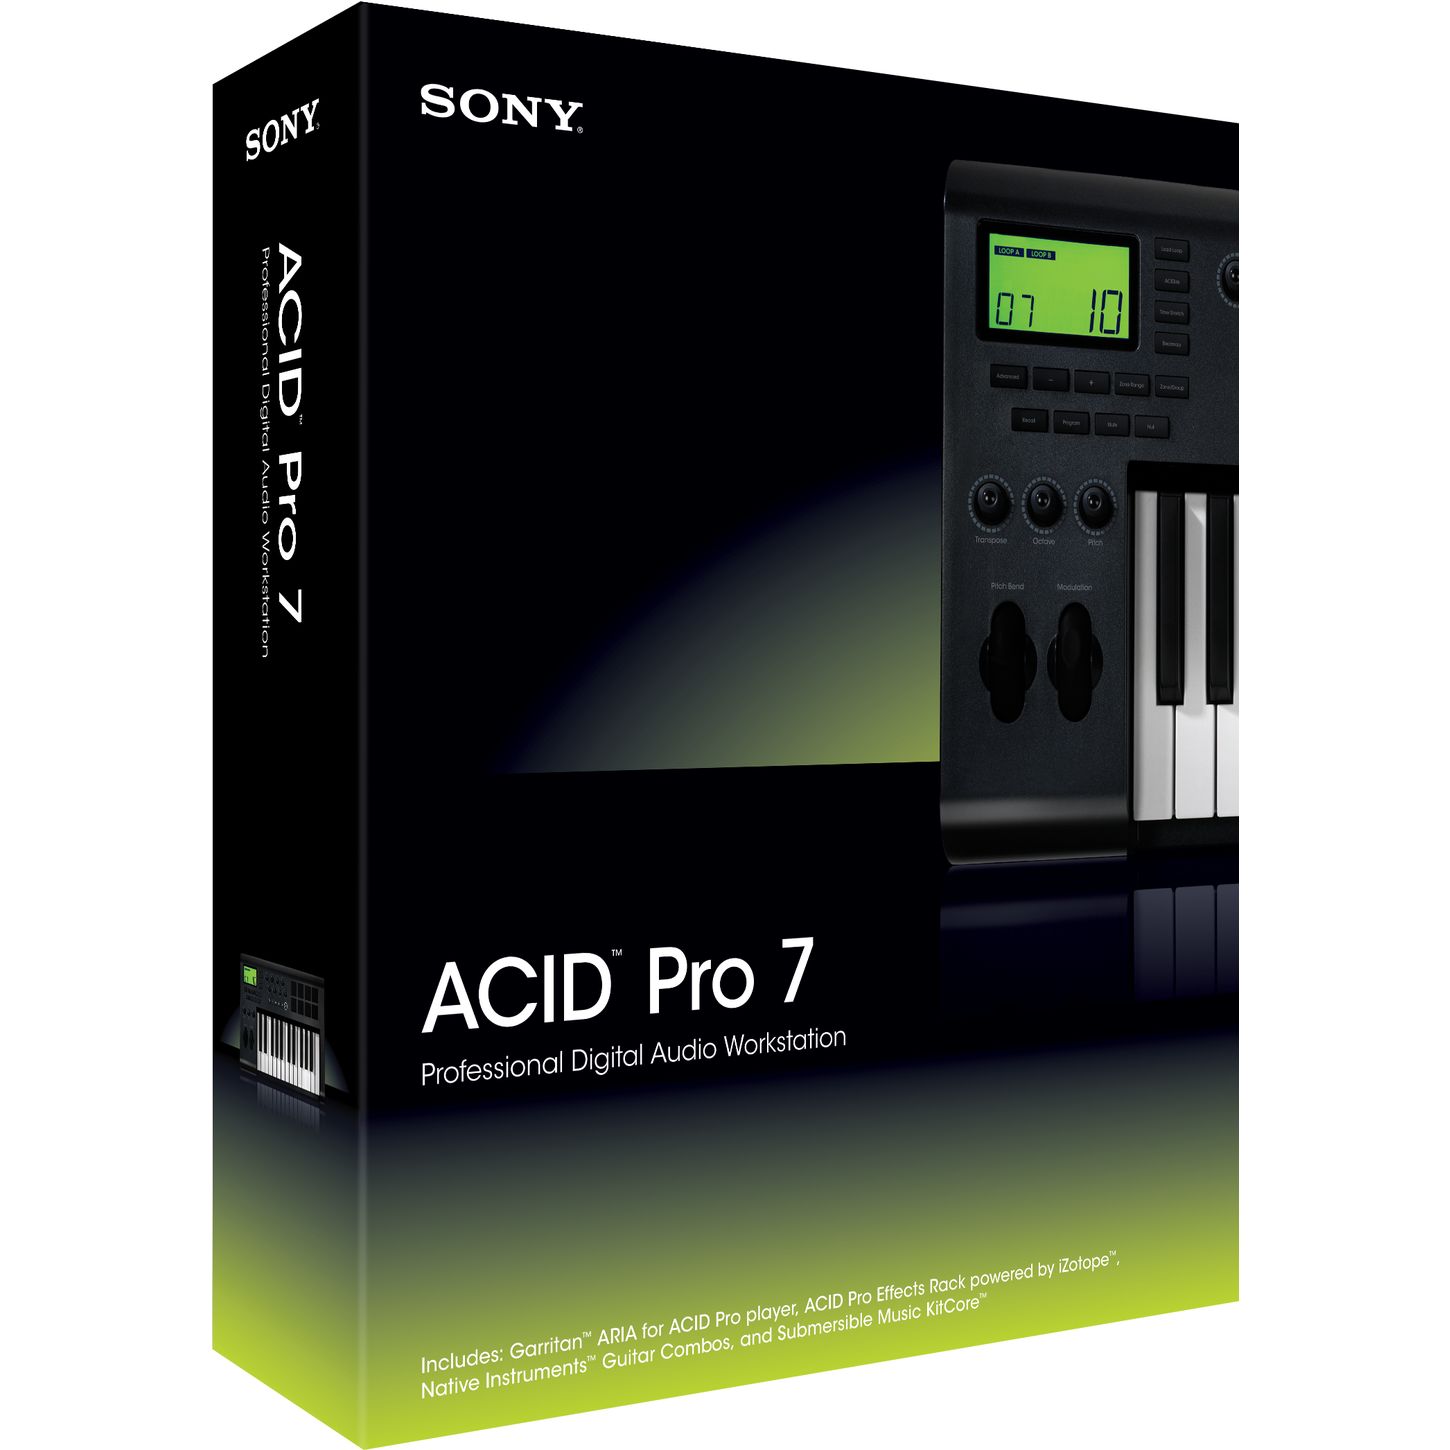 Acid pro software, free download